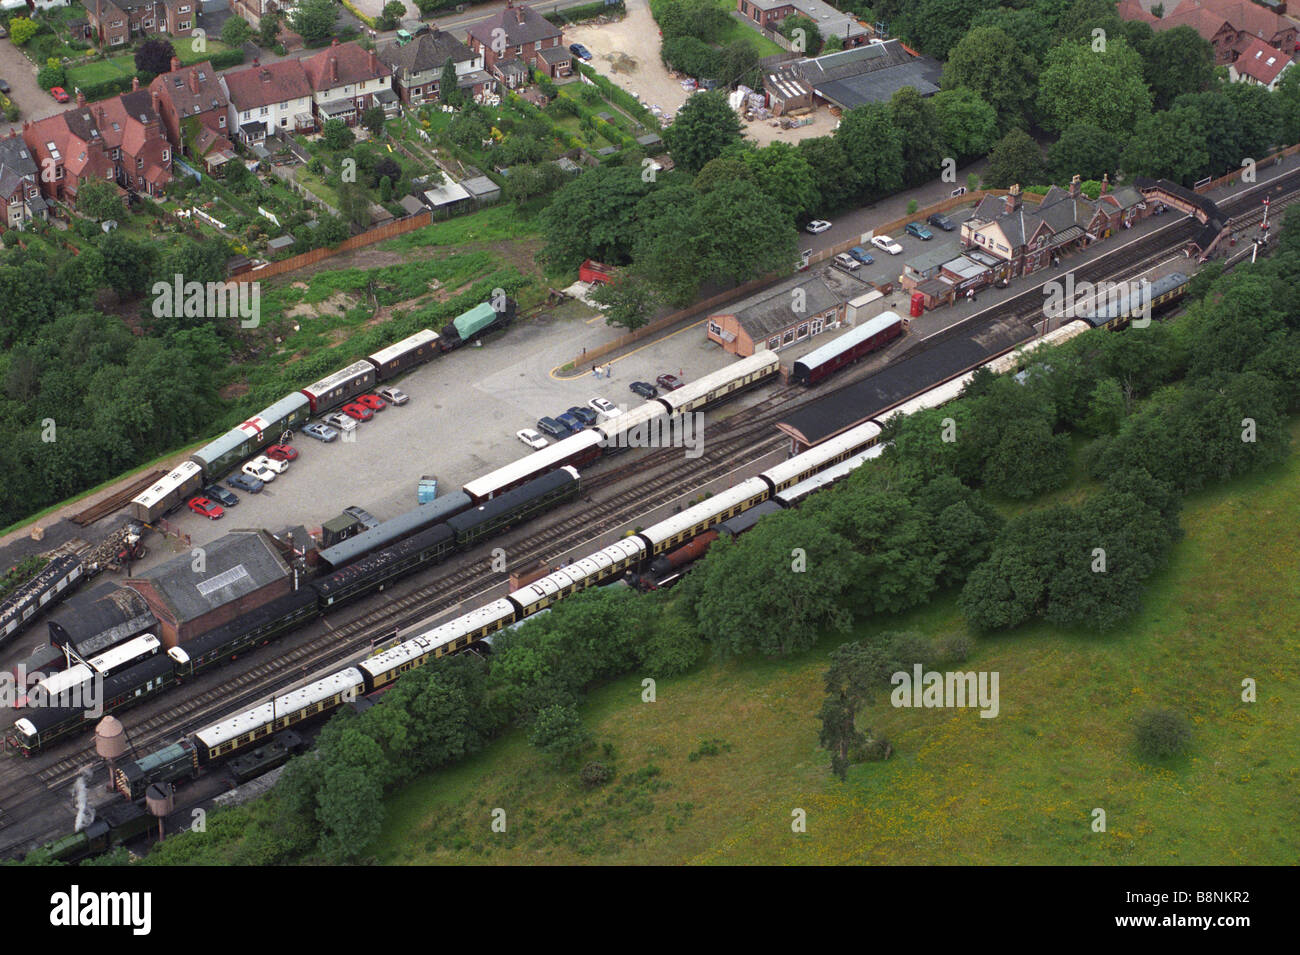 Luftbild Bewdley Railway Station Worcestershire England Uk 14 2 02 Stockfoto